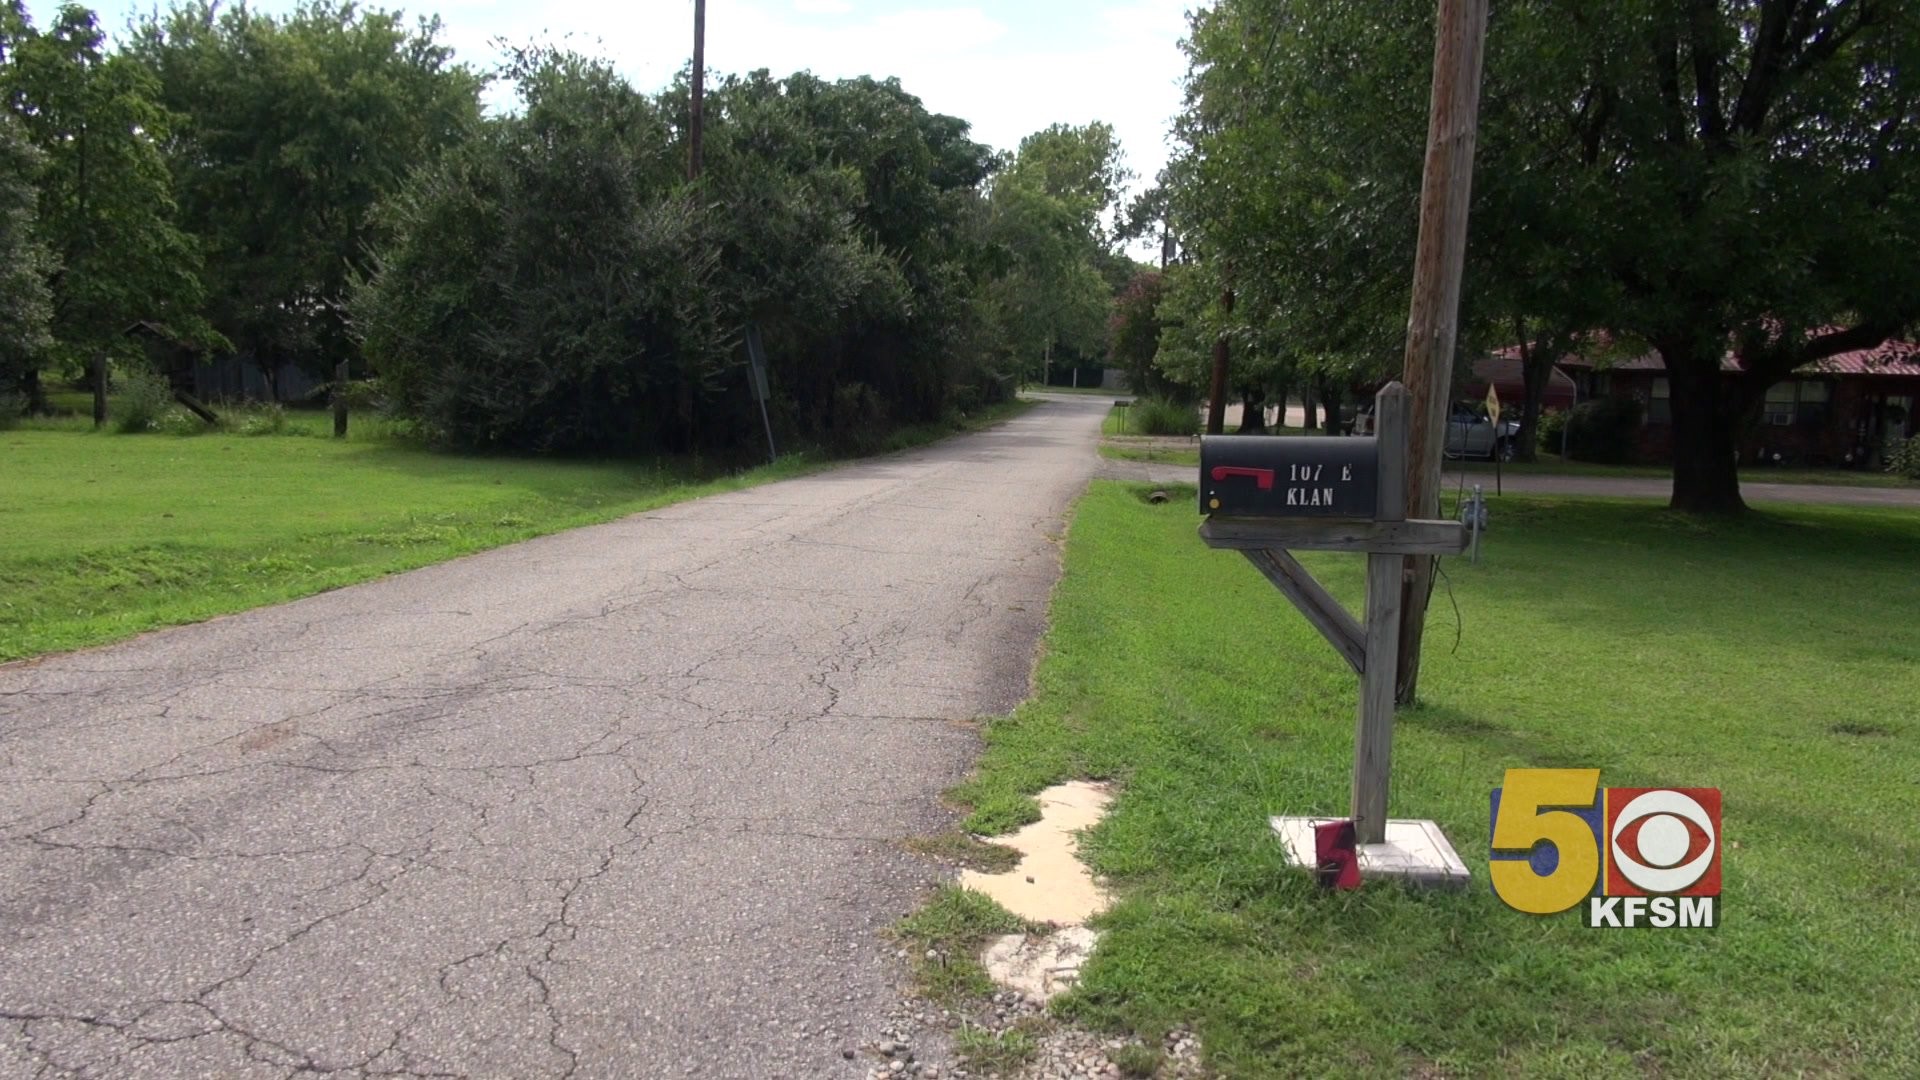 "Klan" Street Sign Stolen, Some Call For Name Change